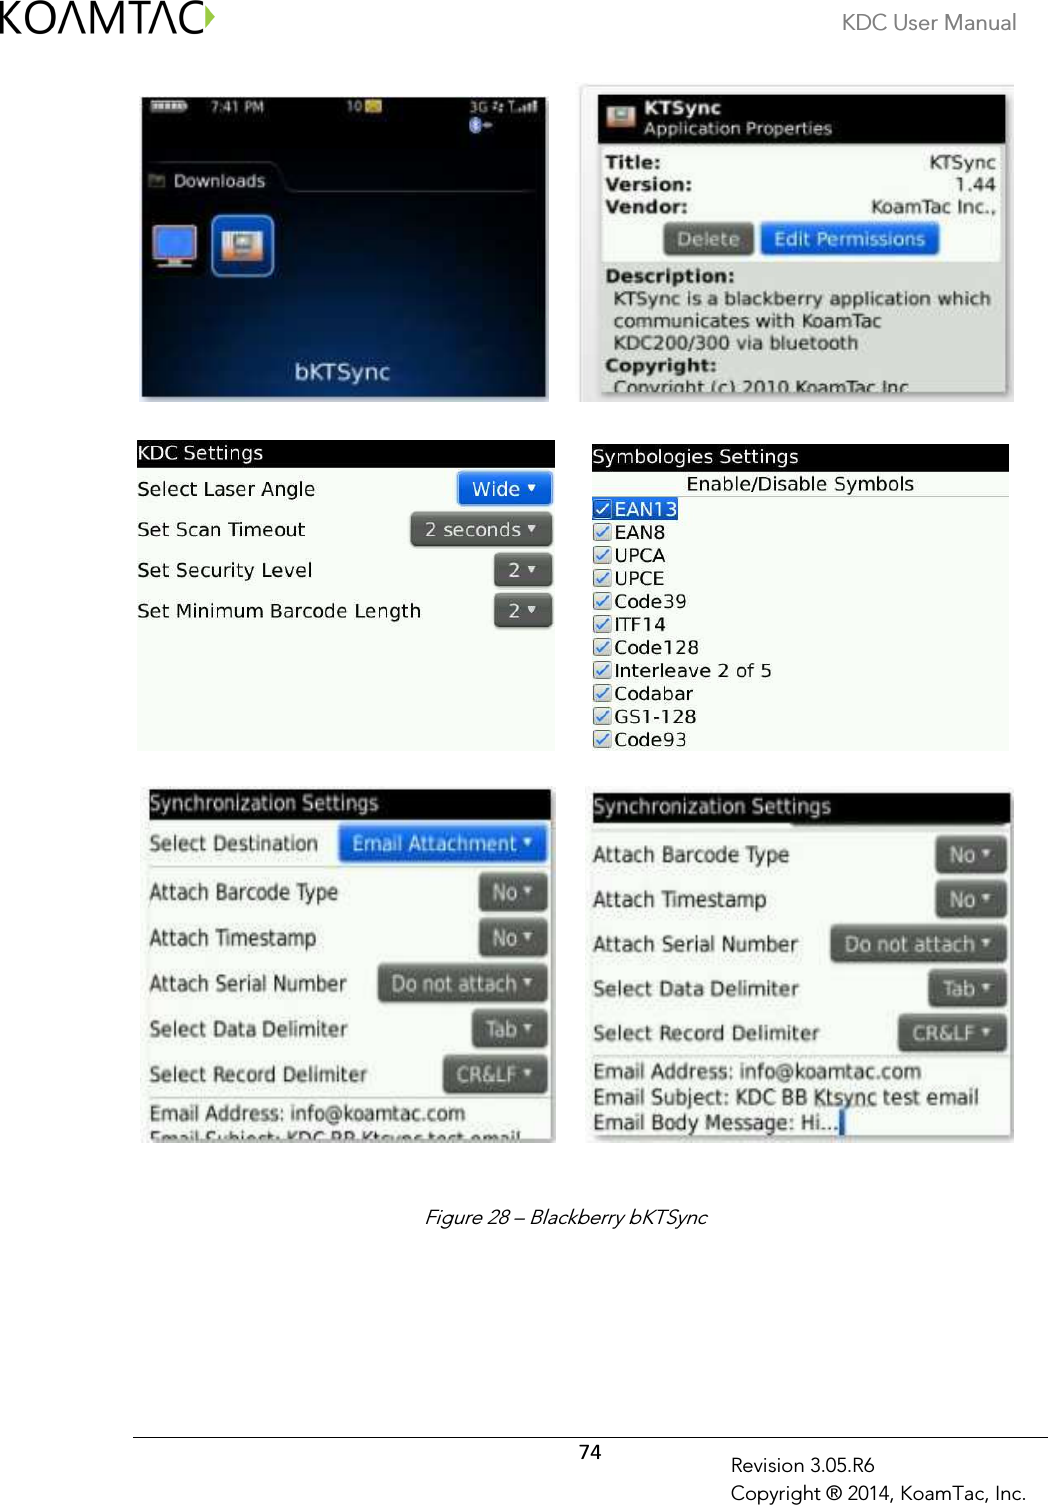 KDC User Manual  74 Revision 3.05.R6 Copyright ® 2014, KoamTac, Inc.                         Figure 28 – Blackberry bKTSync 